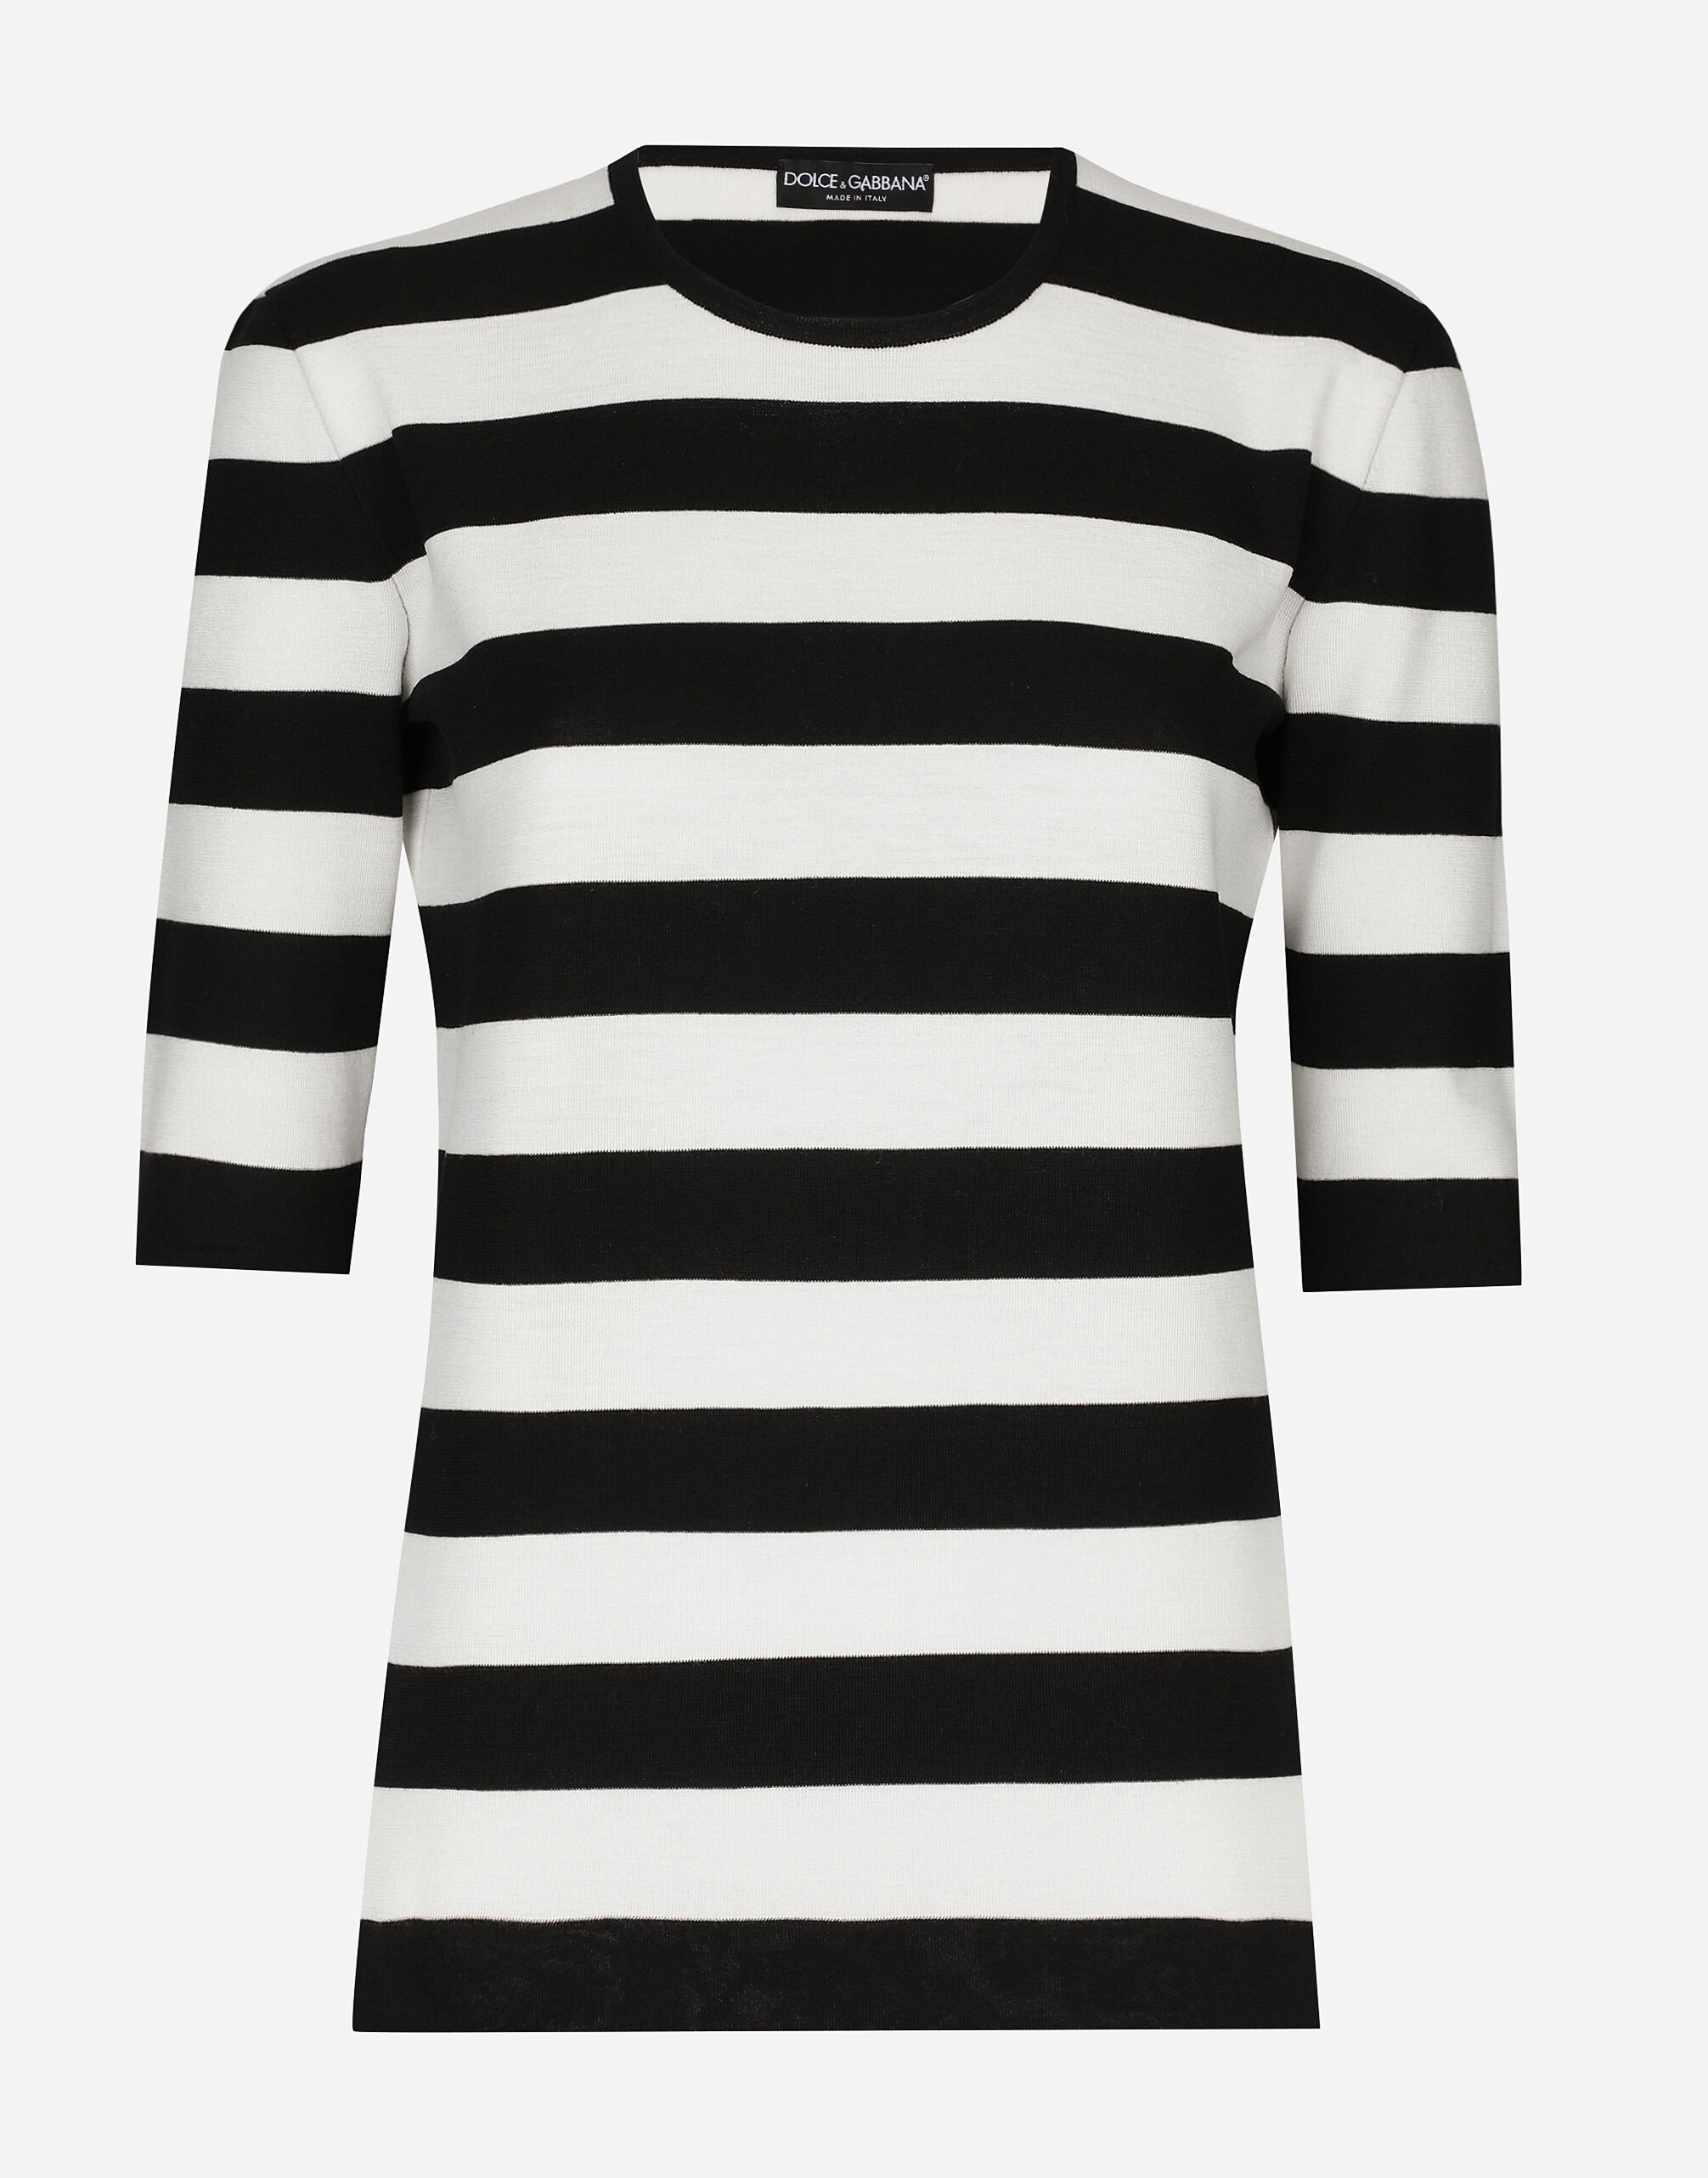 Dolce&Gabbana Wool sweater in inlaid stripes Black FTC17TFUBGB